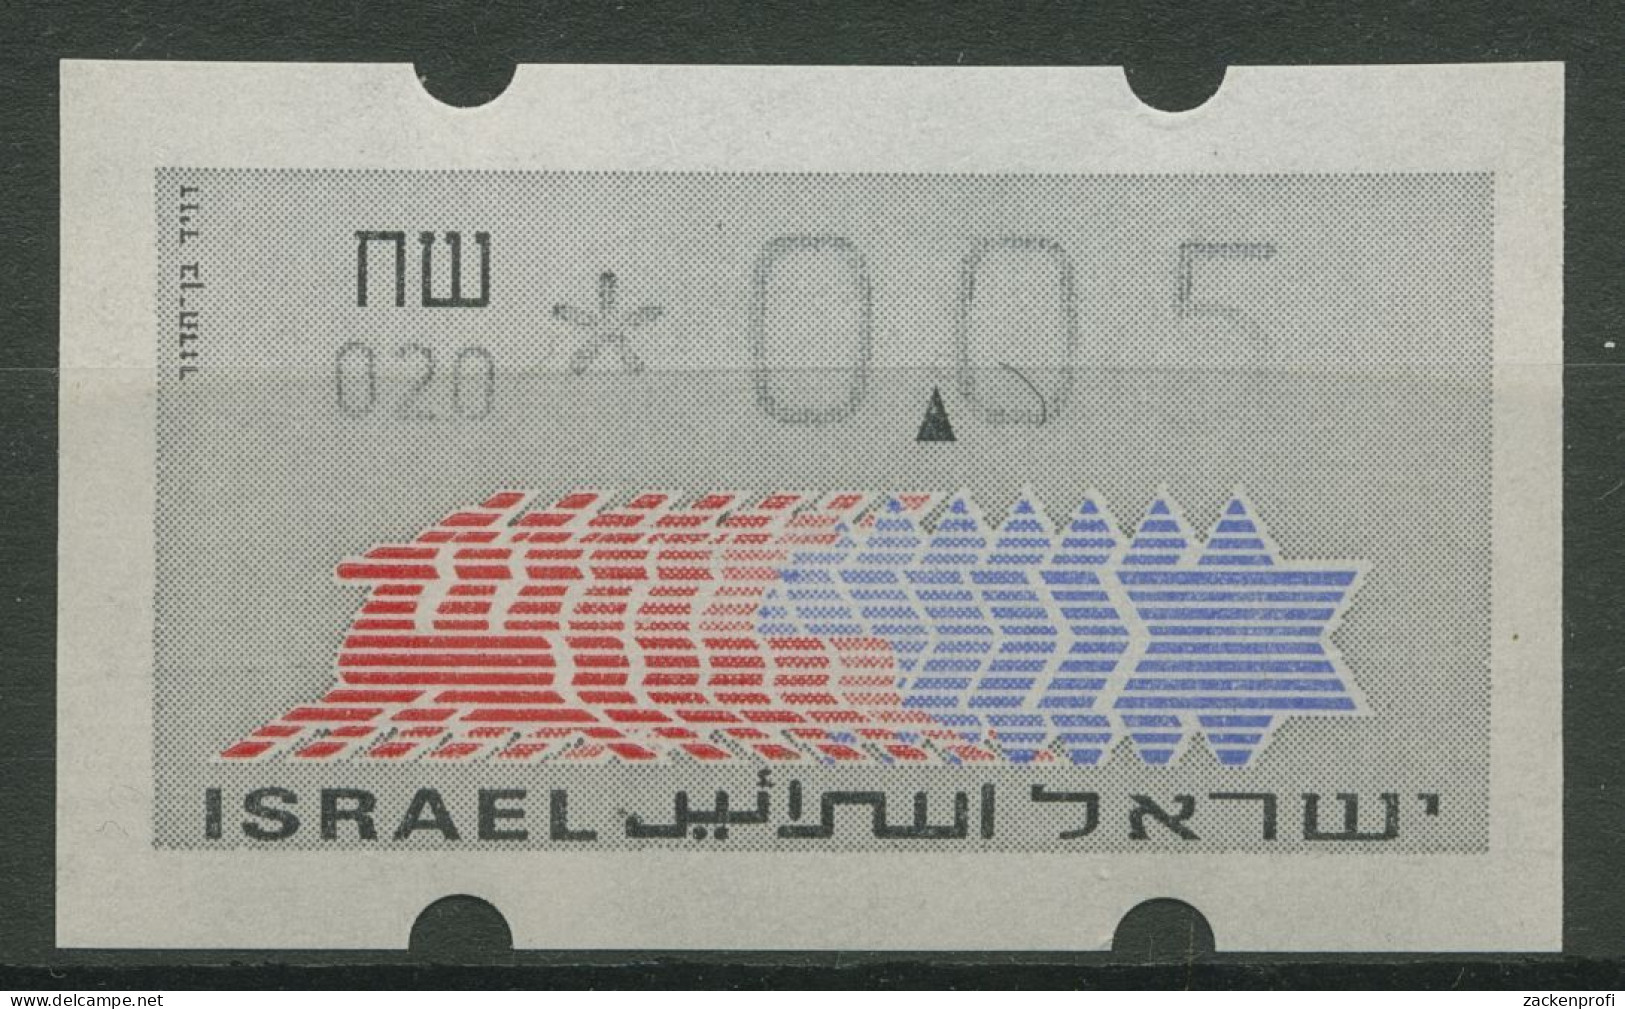 Israel ATM 1990 Hirsch Automat 020 Einzelwert ATM 3.3.20 Postfrisch - Franking Labels